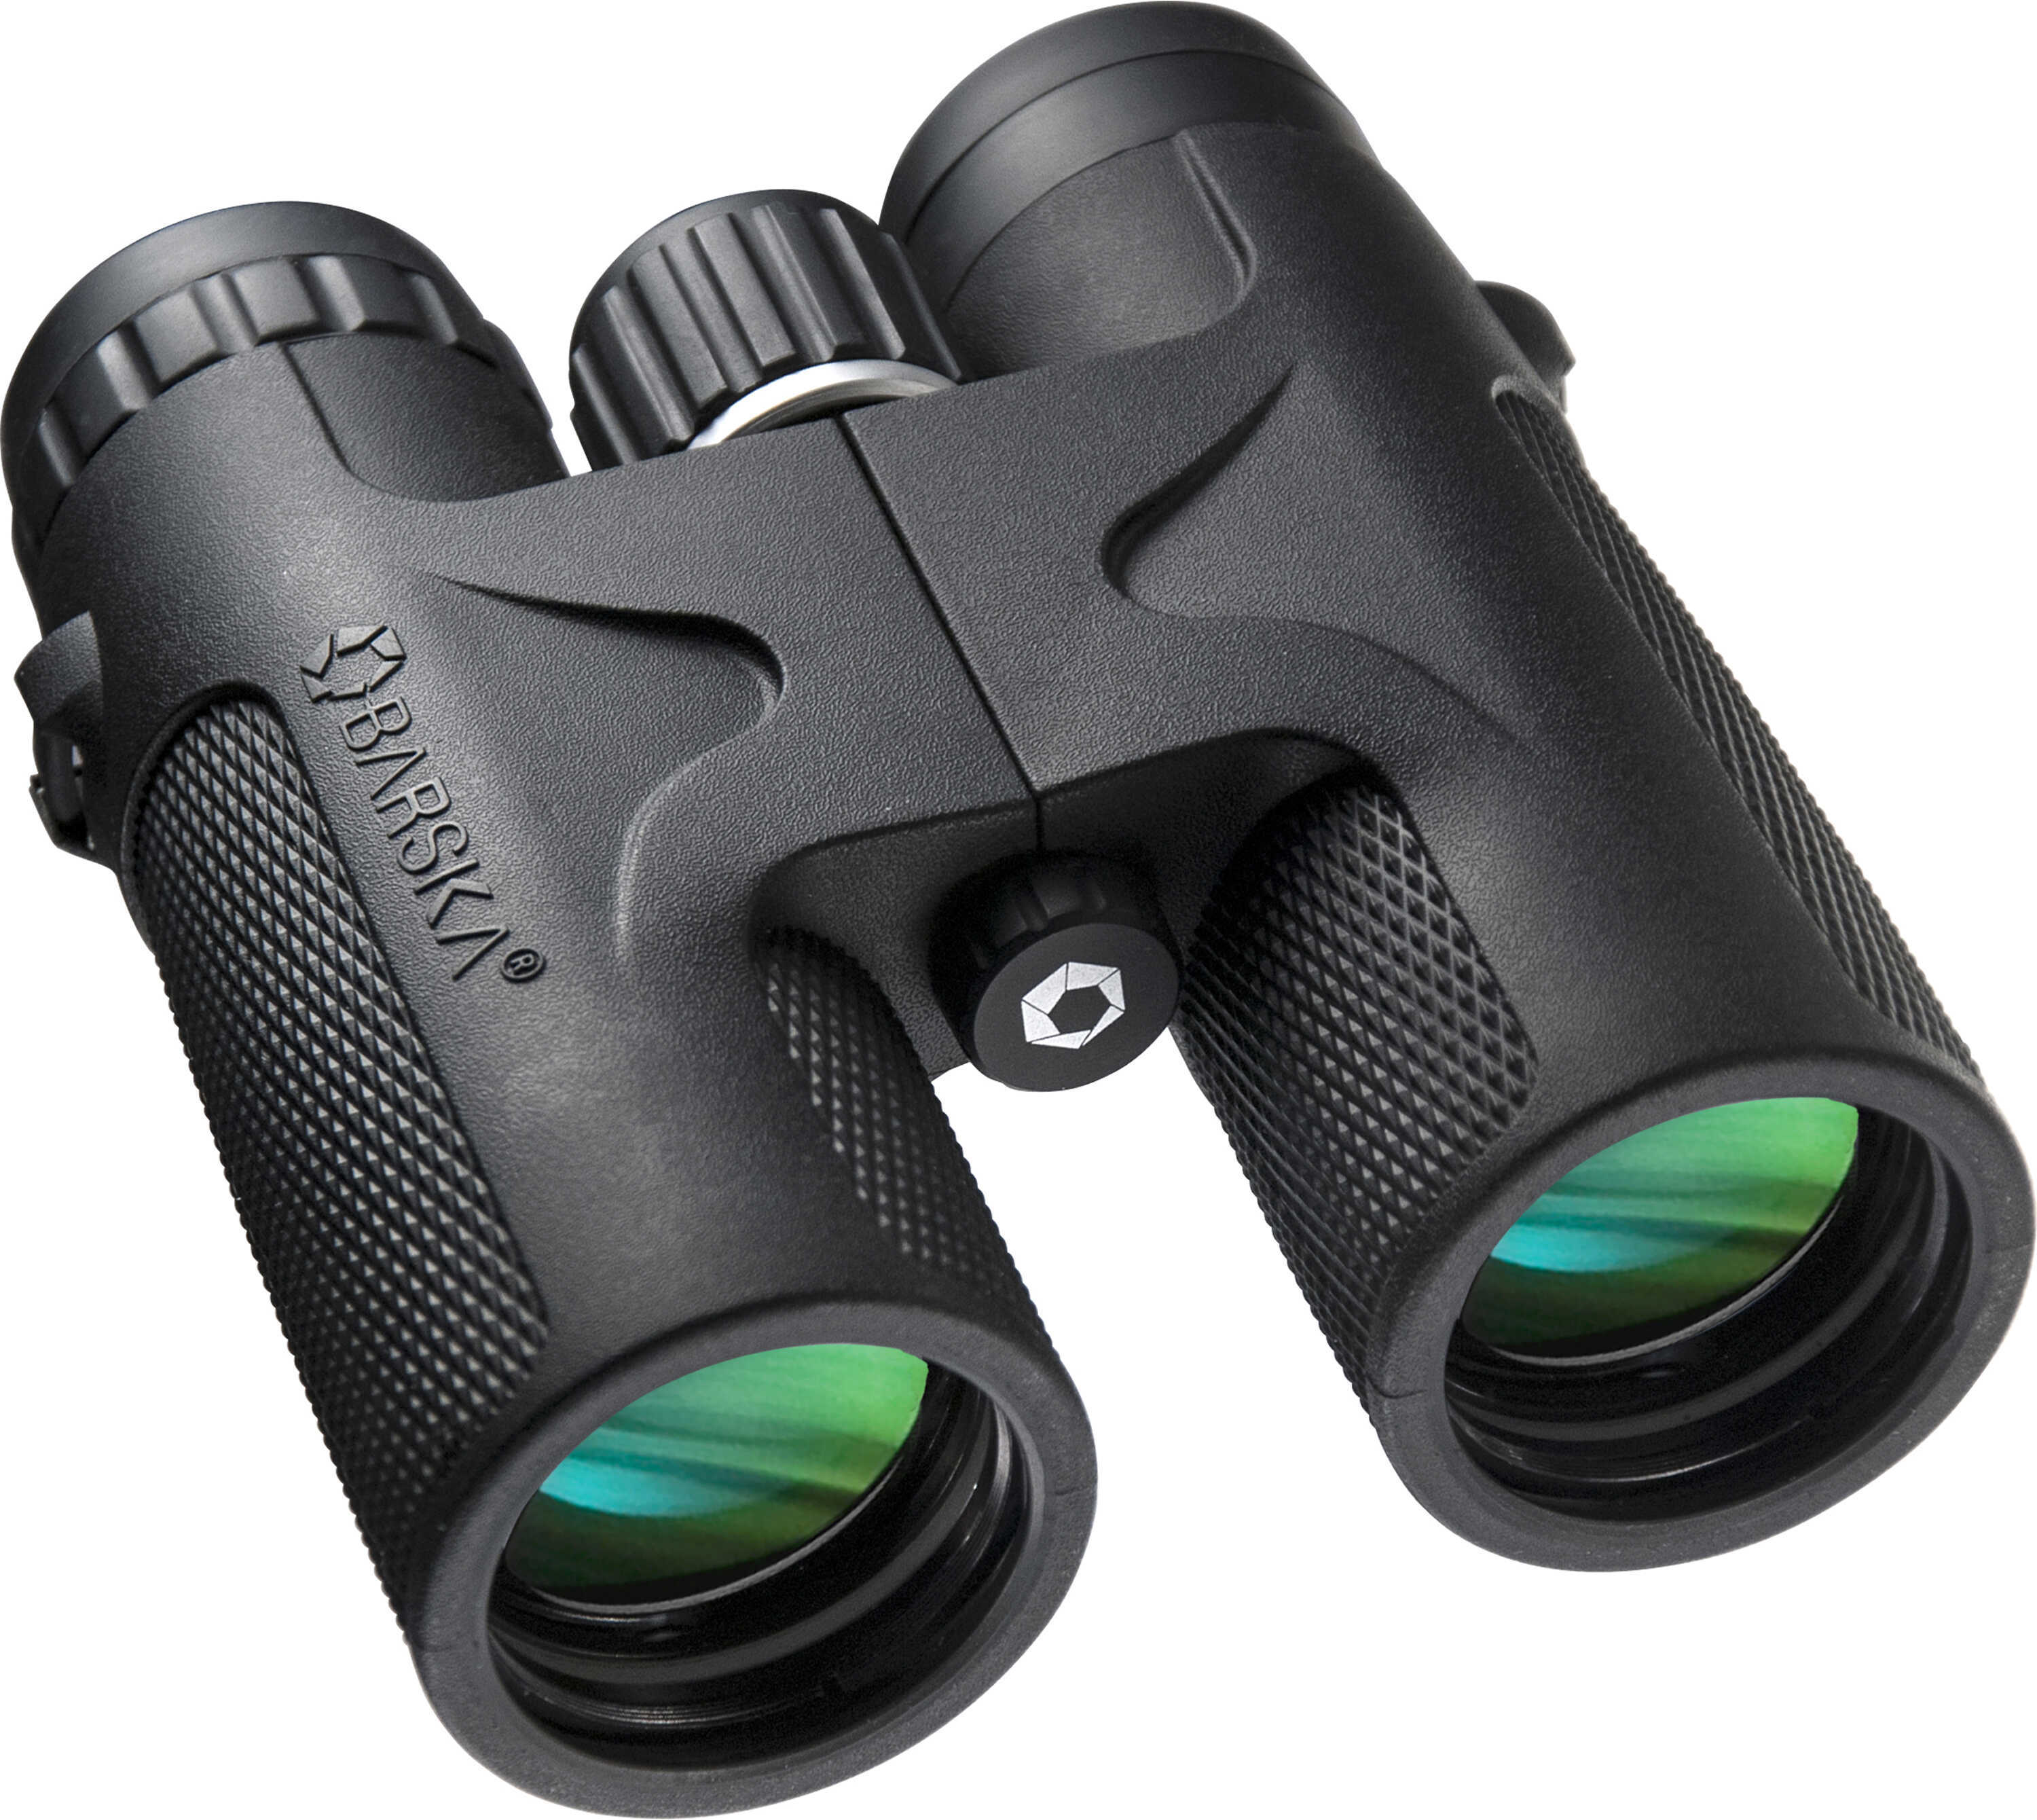 Barska Blackhawk Waterproof Binocular 10X42mm Matte Finish Includes Carrying Case Lens Covers Neck Strap and